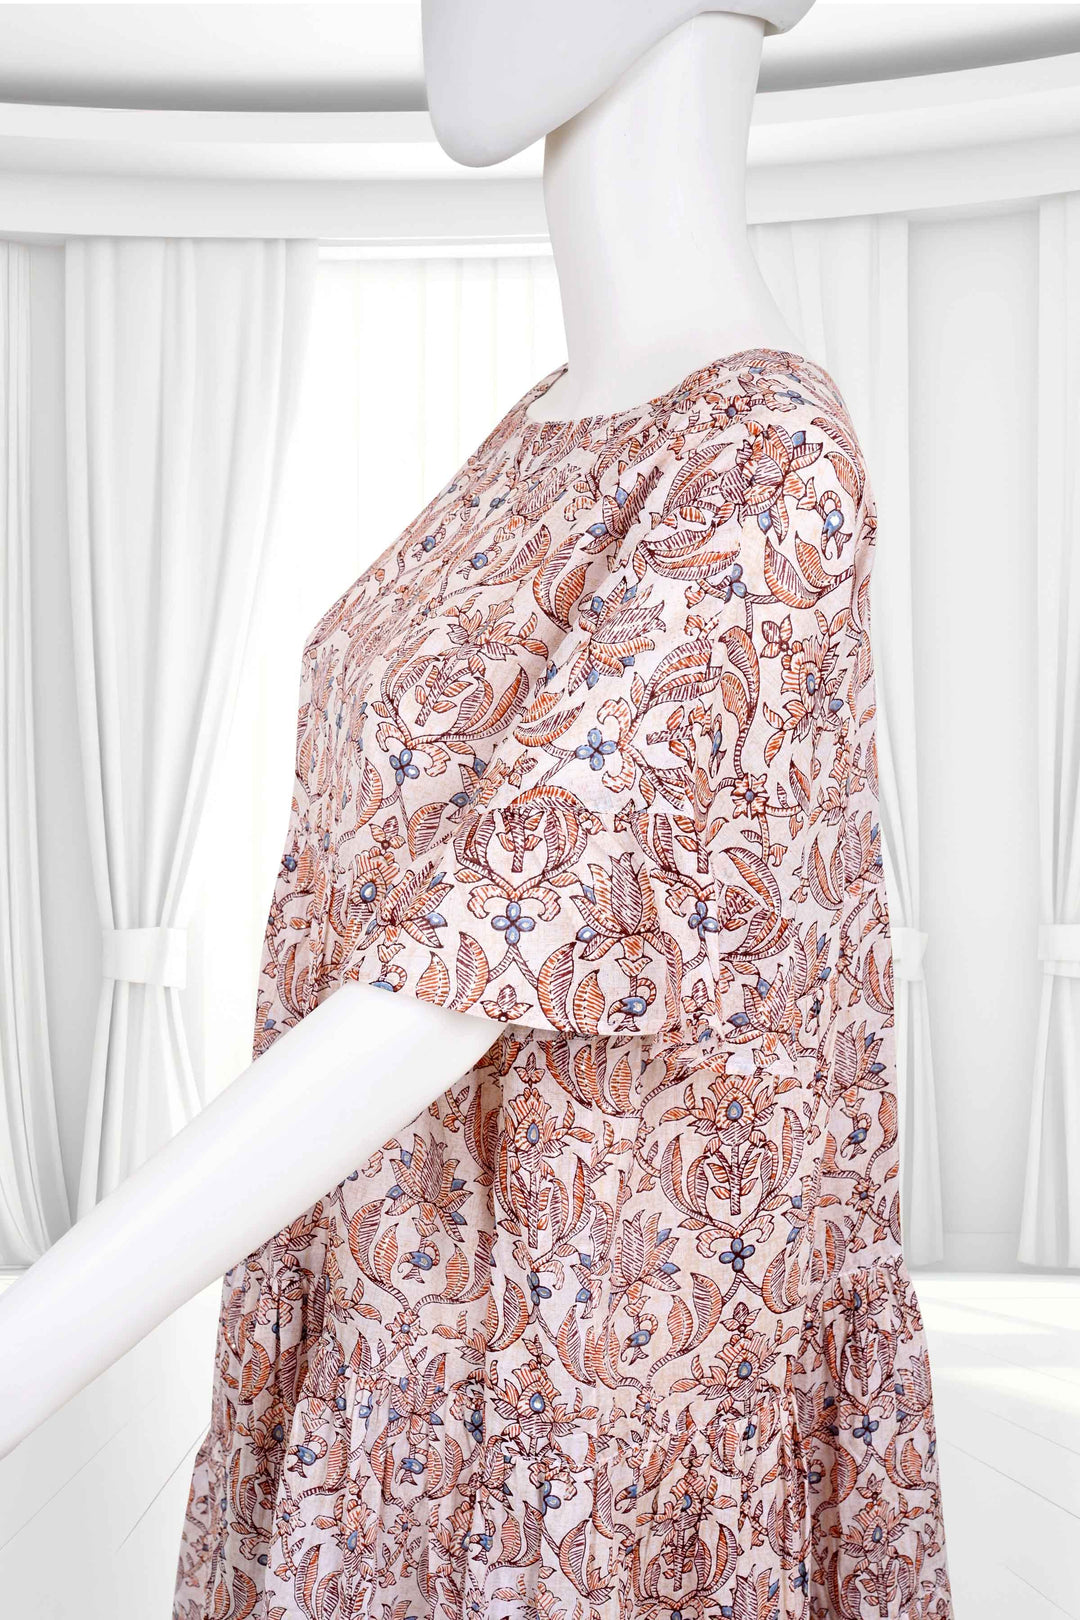 Gingham Checkered ELOISE Cotton Maxi Dress